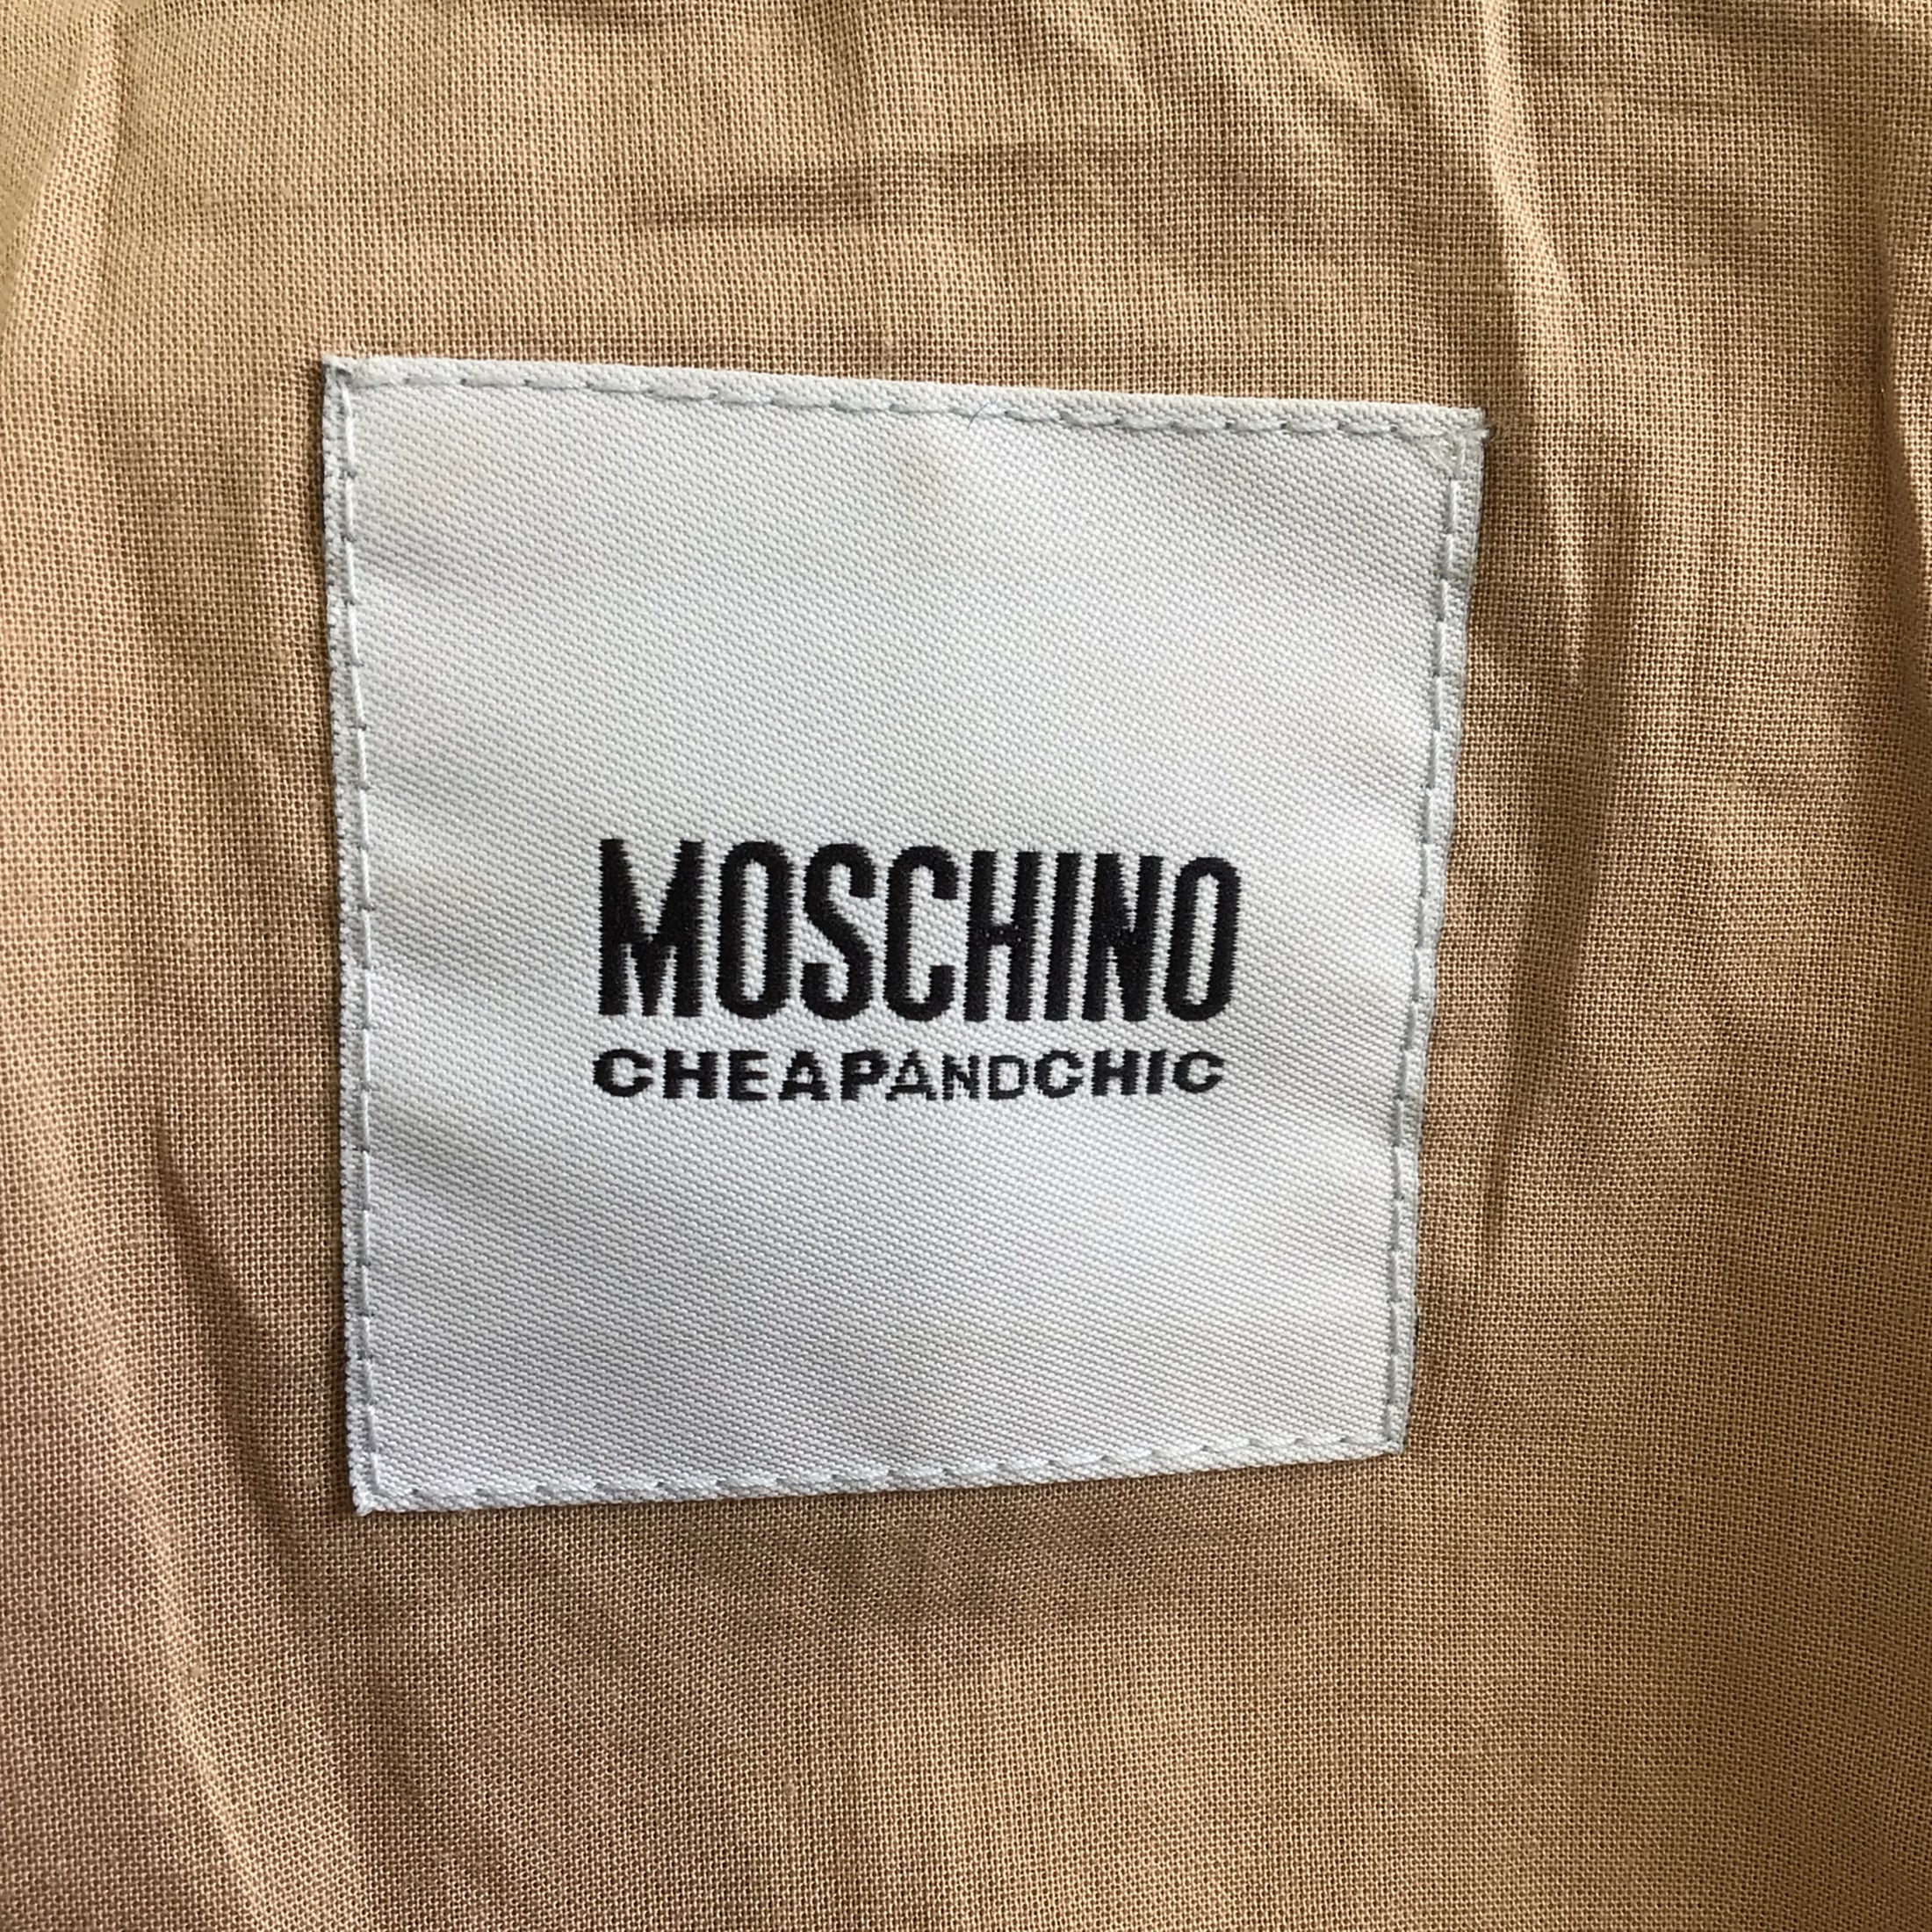 Moschino Cheap and Chic Tan Moto Zip Sheepskin Leather Jacket